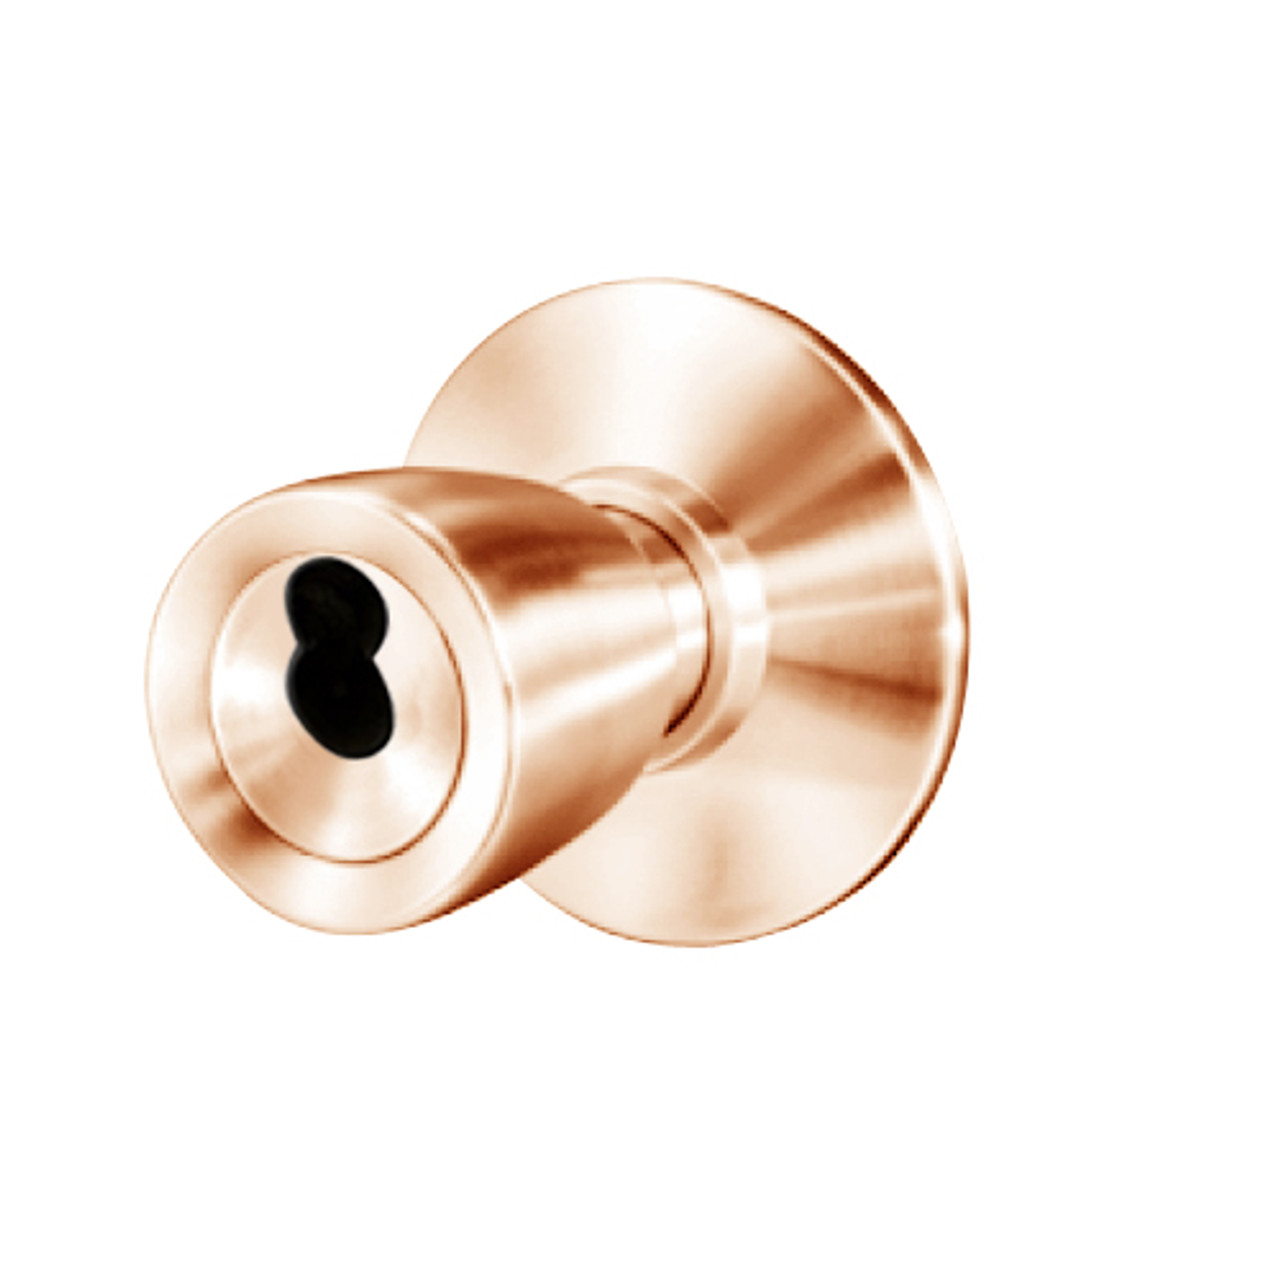 8K47YR6DSTK611 Best 8K Series Exit Heavy Duty Cylindrical Knob Locks with Tulip Style in Bright Bronze